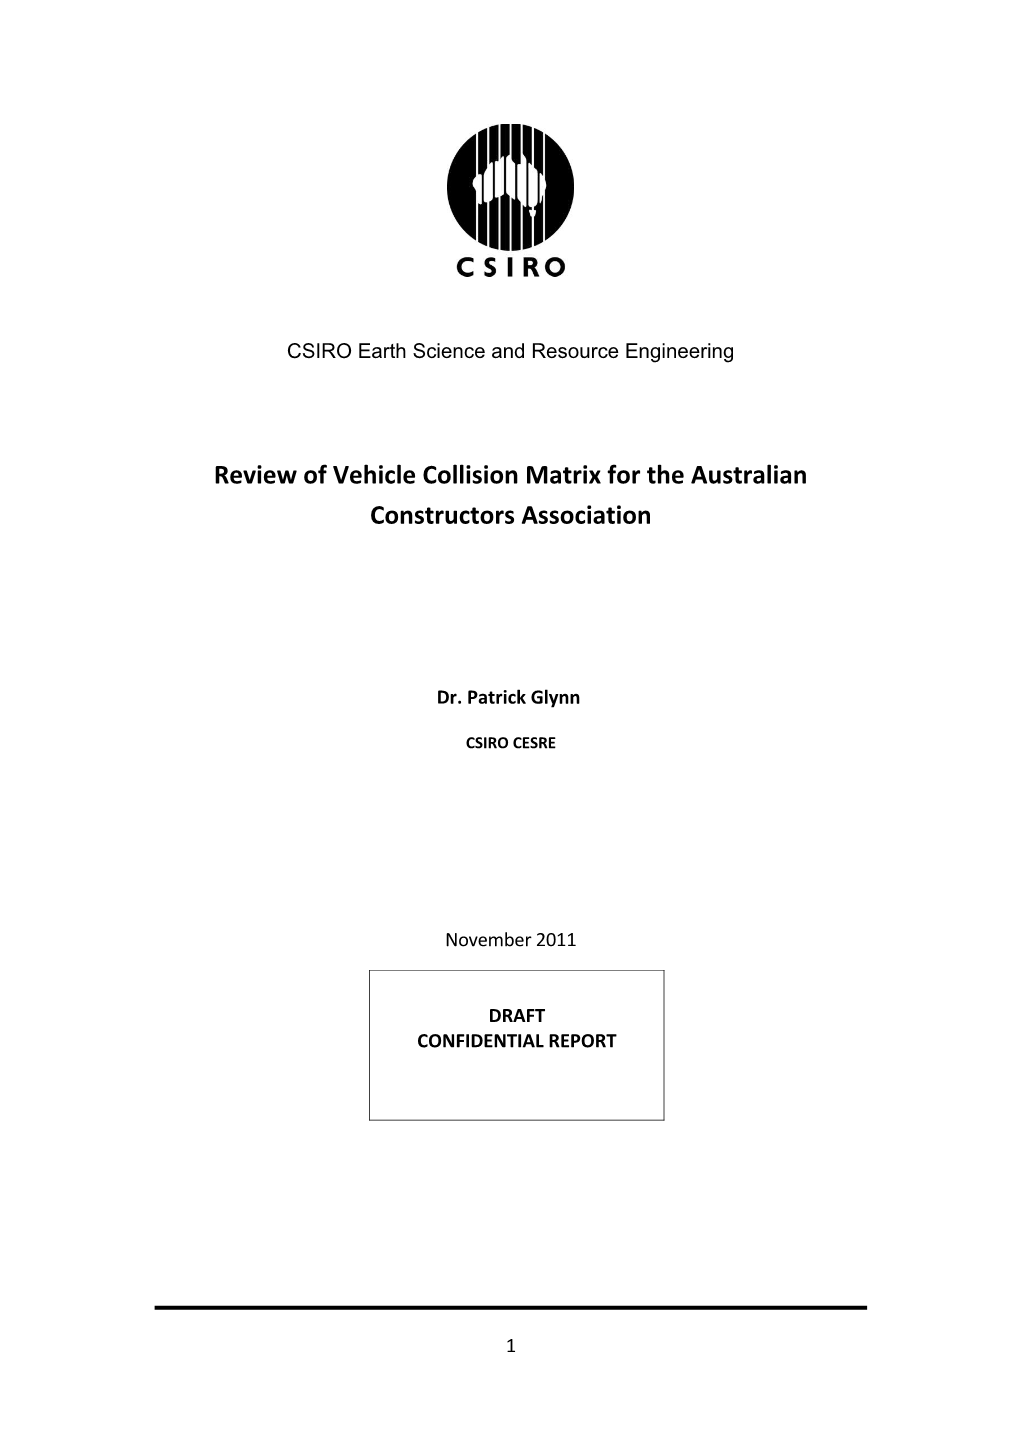 Review of Vehicle Collision Matrix for the Australian Constructors Association